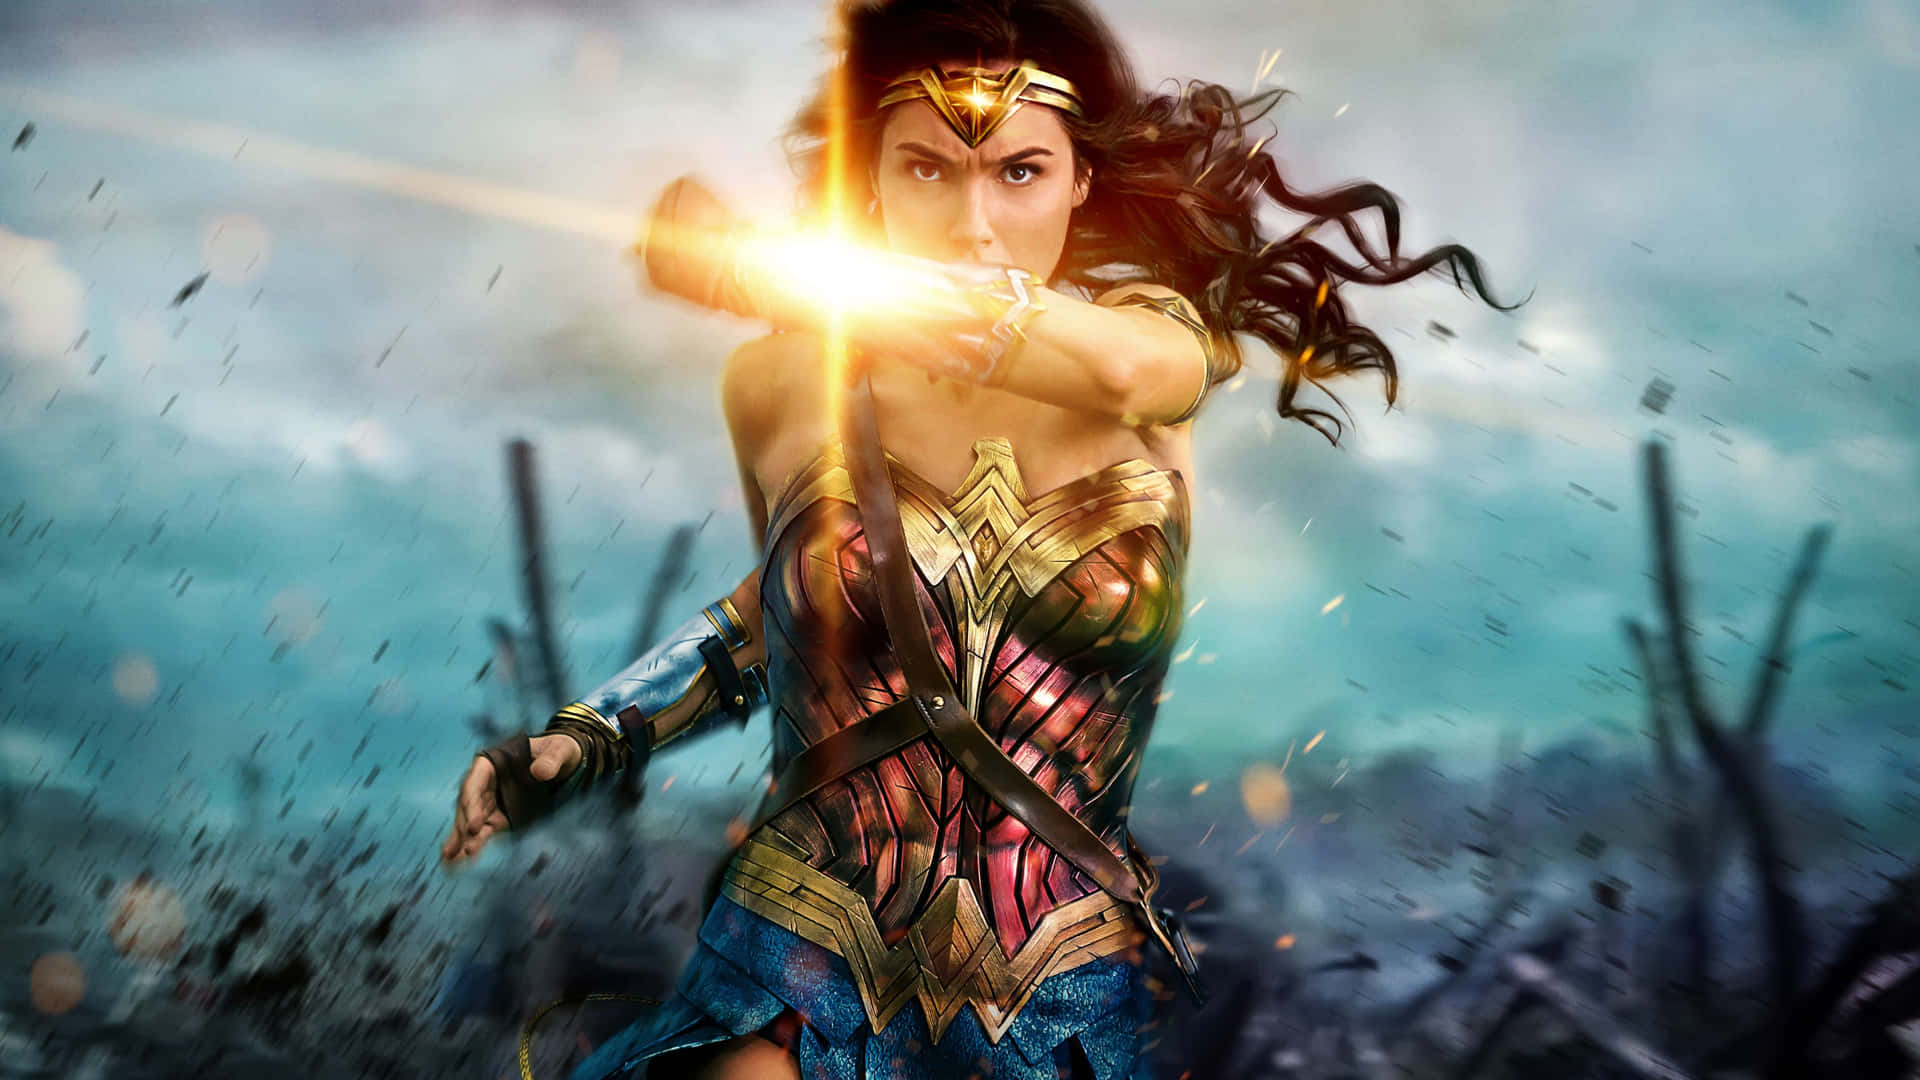 Action Wonder Woman DC Comics Wallpaper